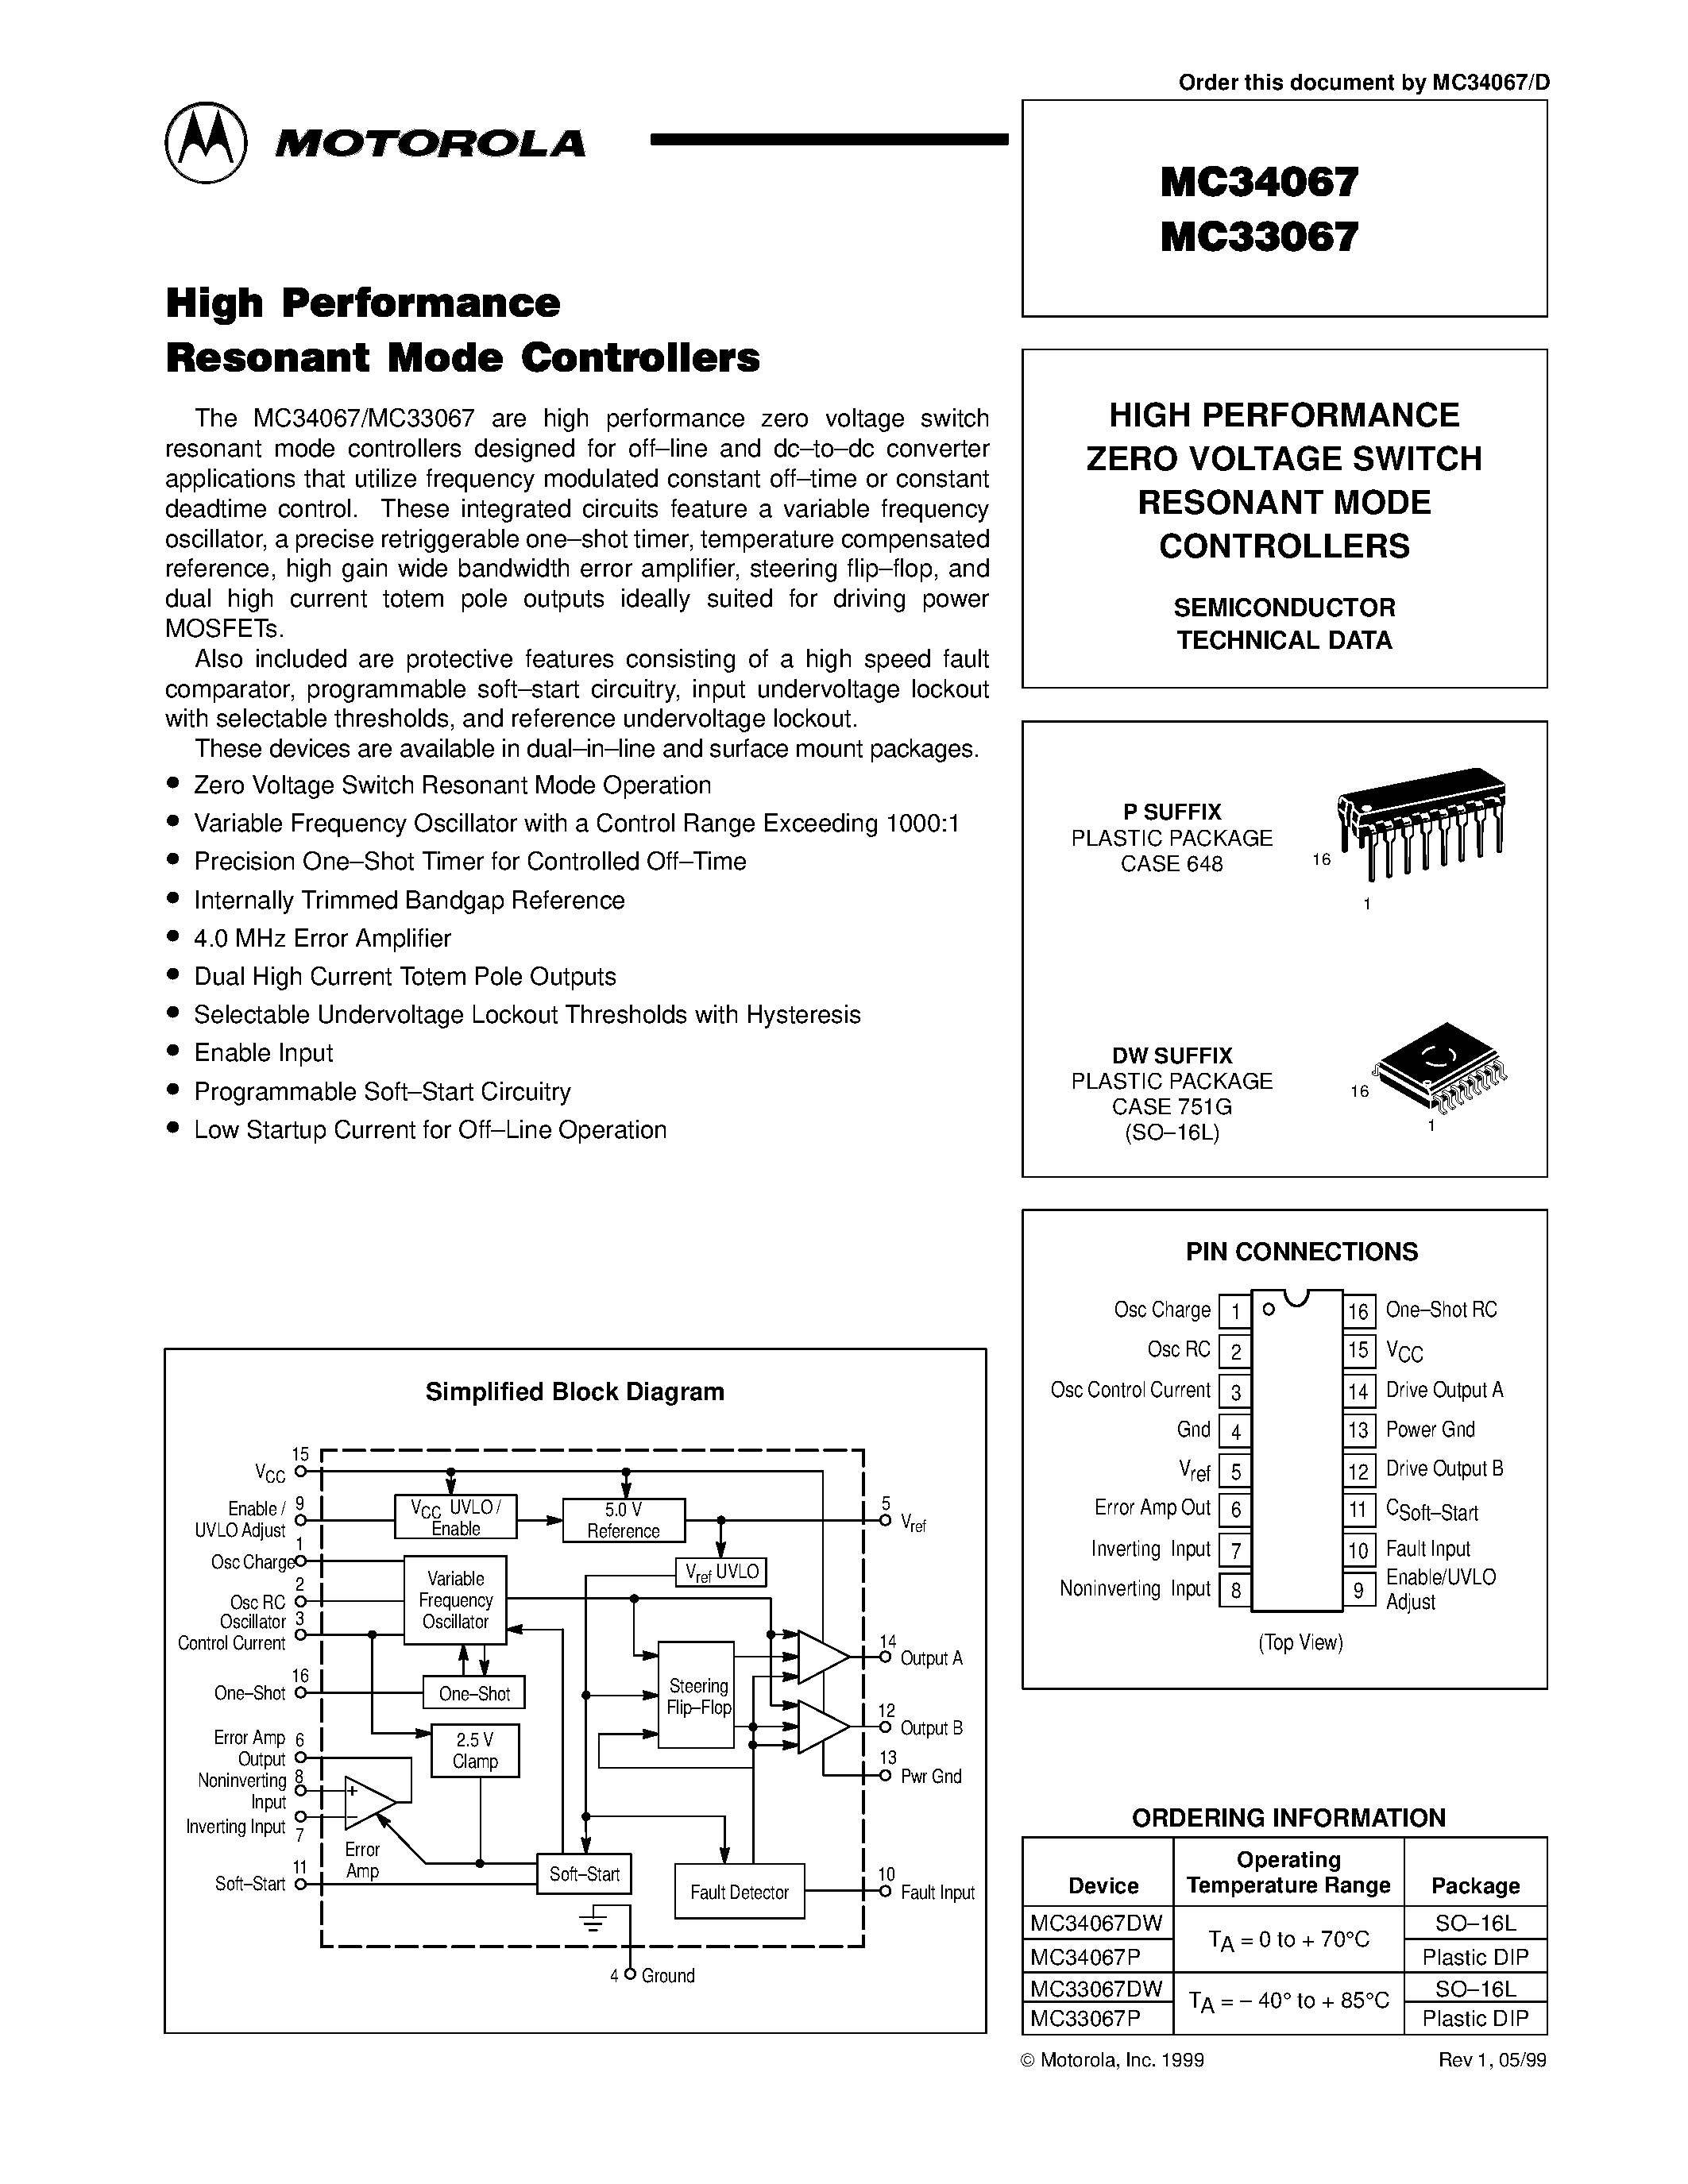 Datasheet MC33067 - (MC33067 / MC34067) HIGH PERFORMANCE ZERO VOLTAGE SWITCH RESONANT MODE CONTROLLERS page 1